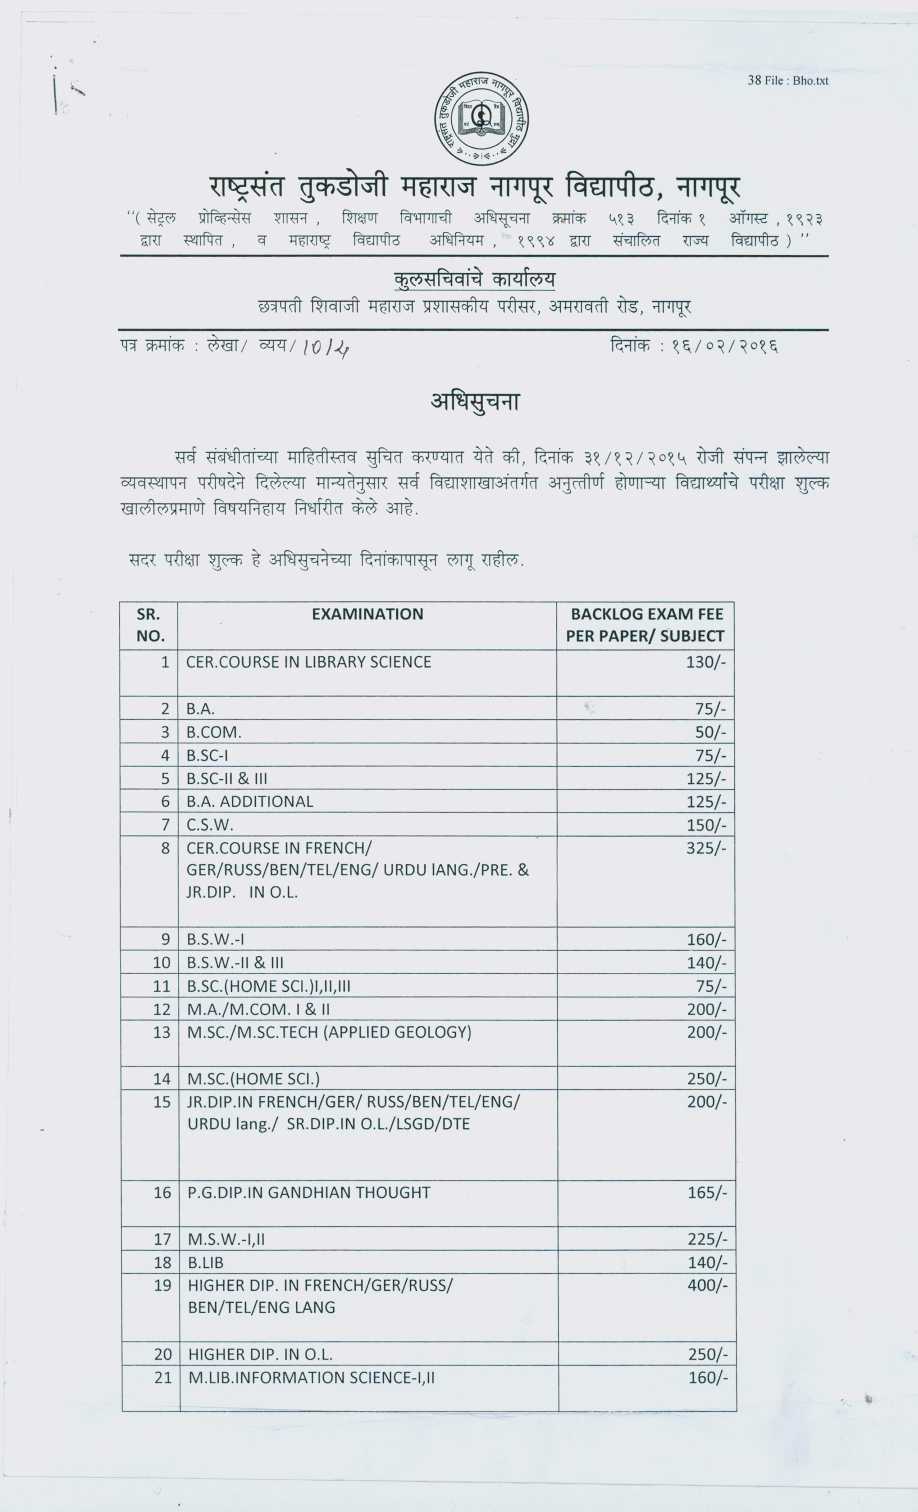 phd fees in nagpur university